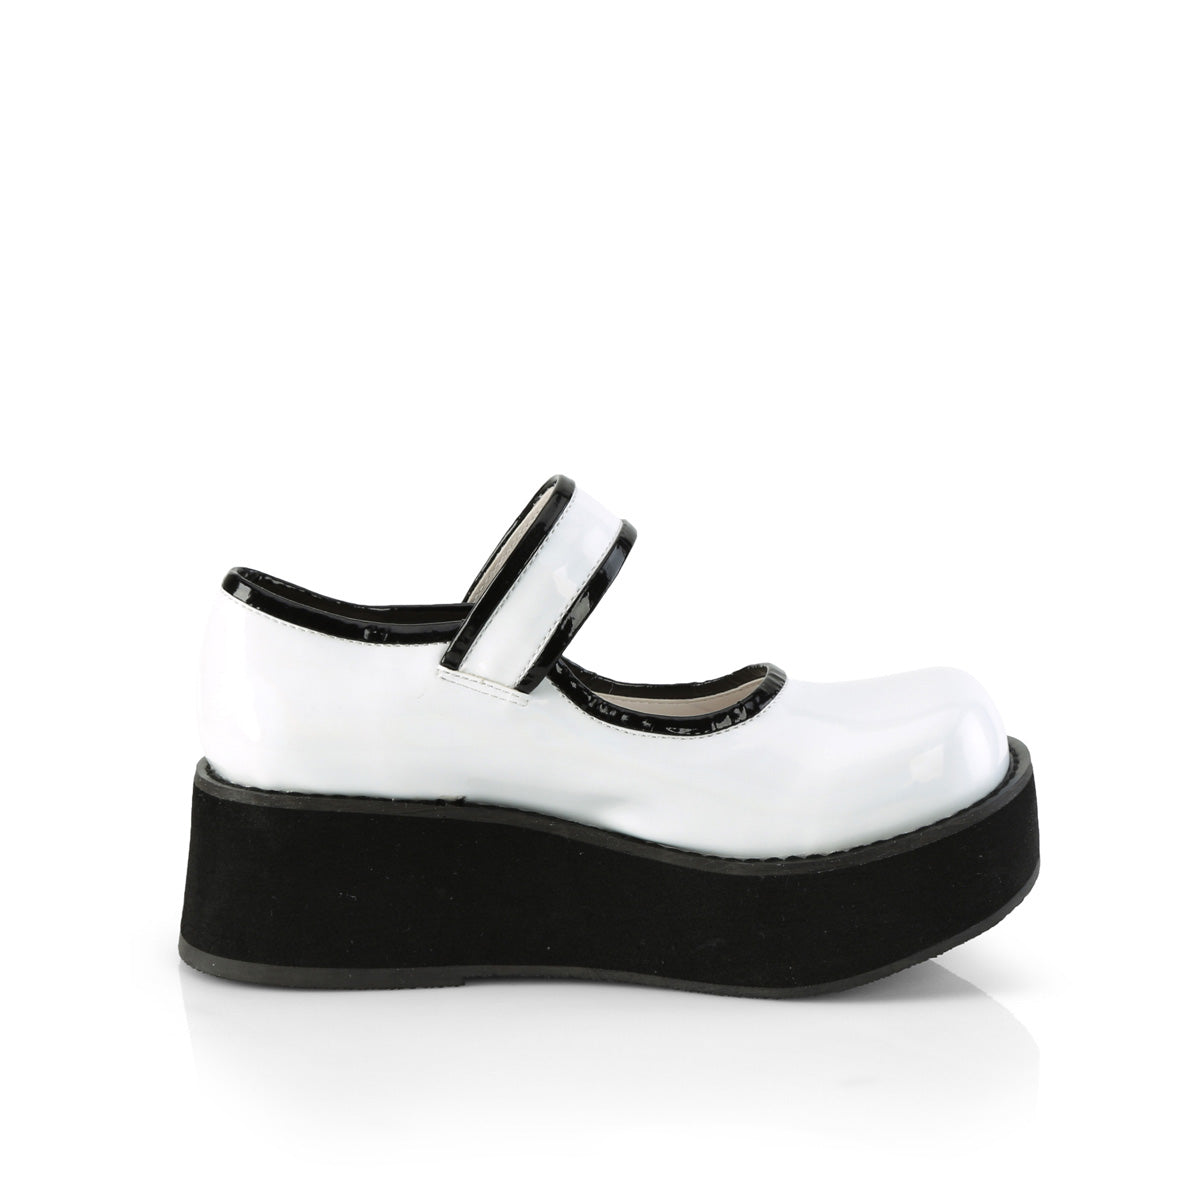 SPRITE-01 Demoniacult Alternative Footwear Women's Platform Shoes